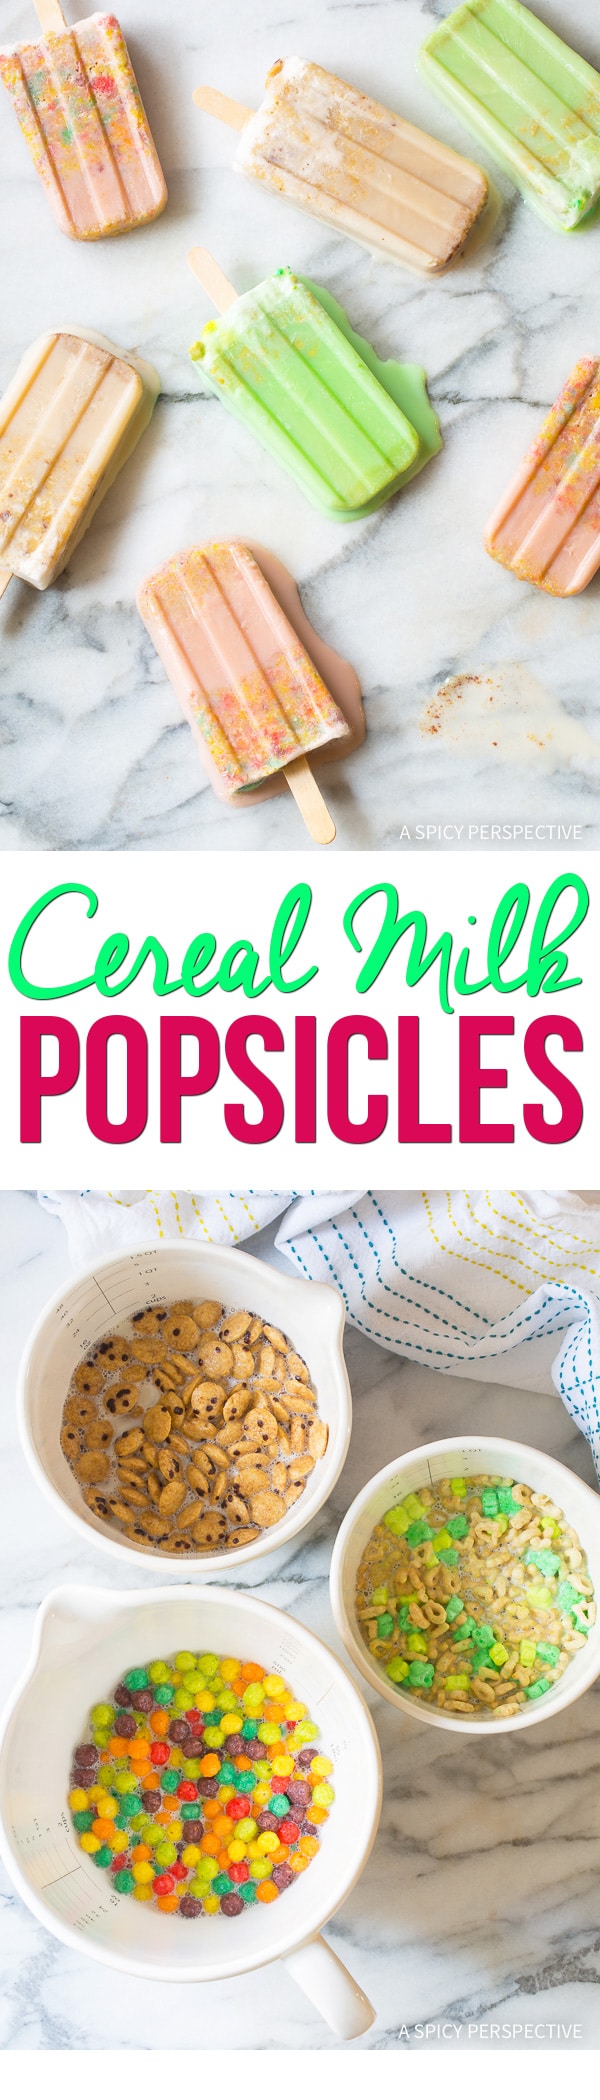 3-Ingredient Cereal Milk Popsicles Recipe